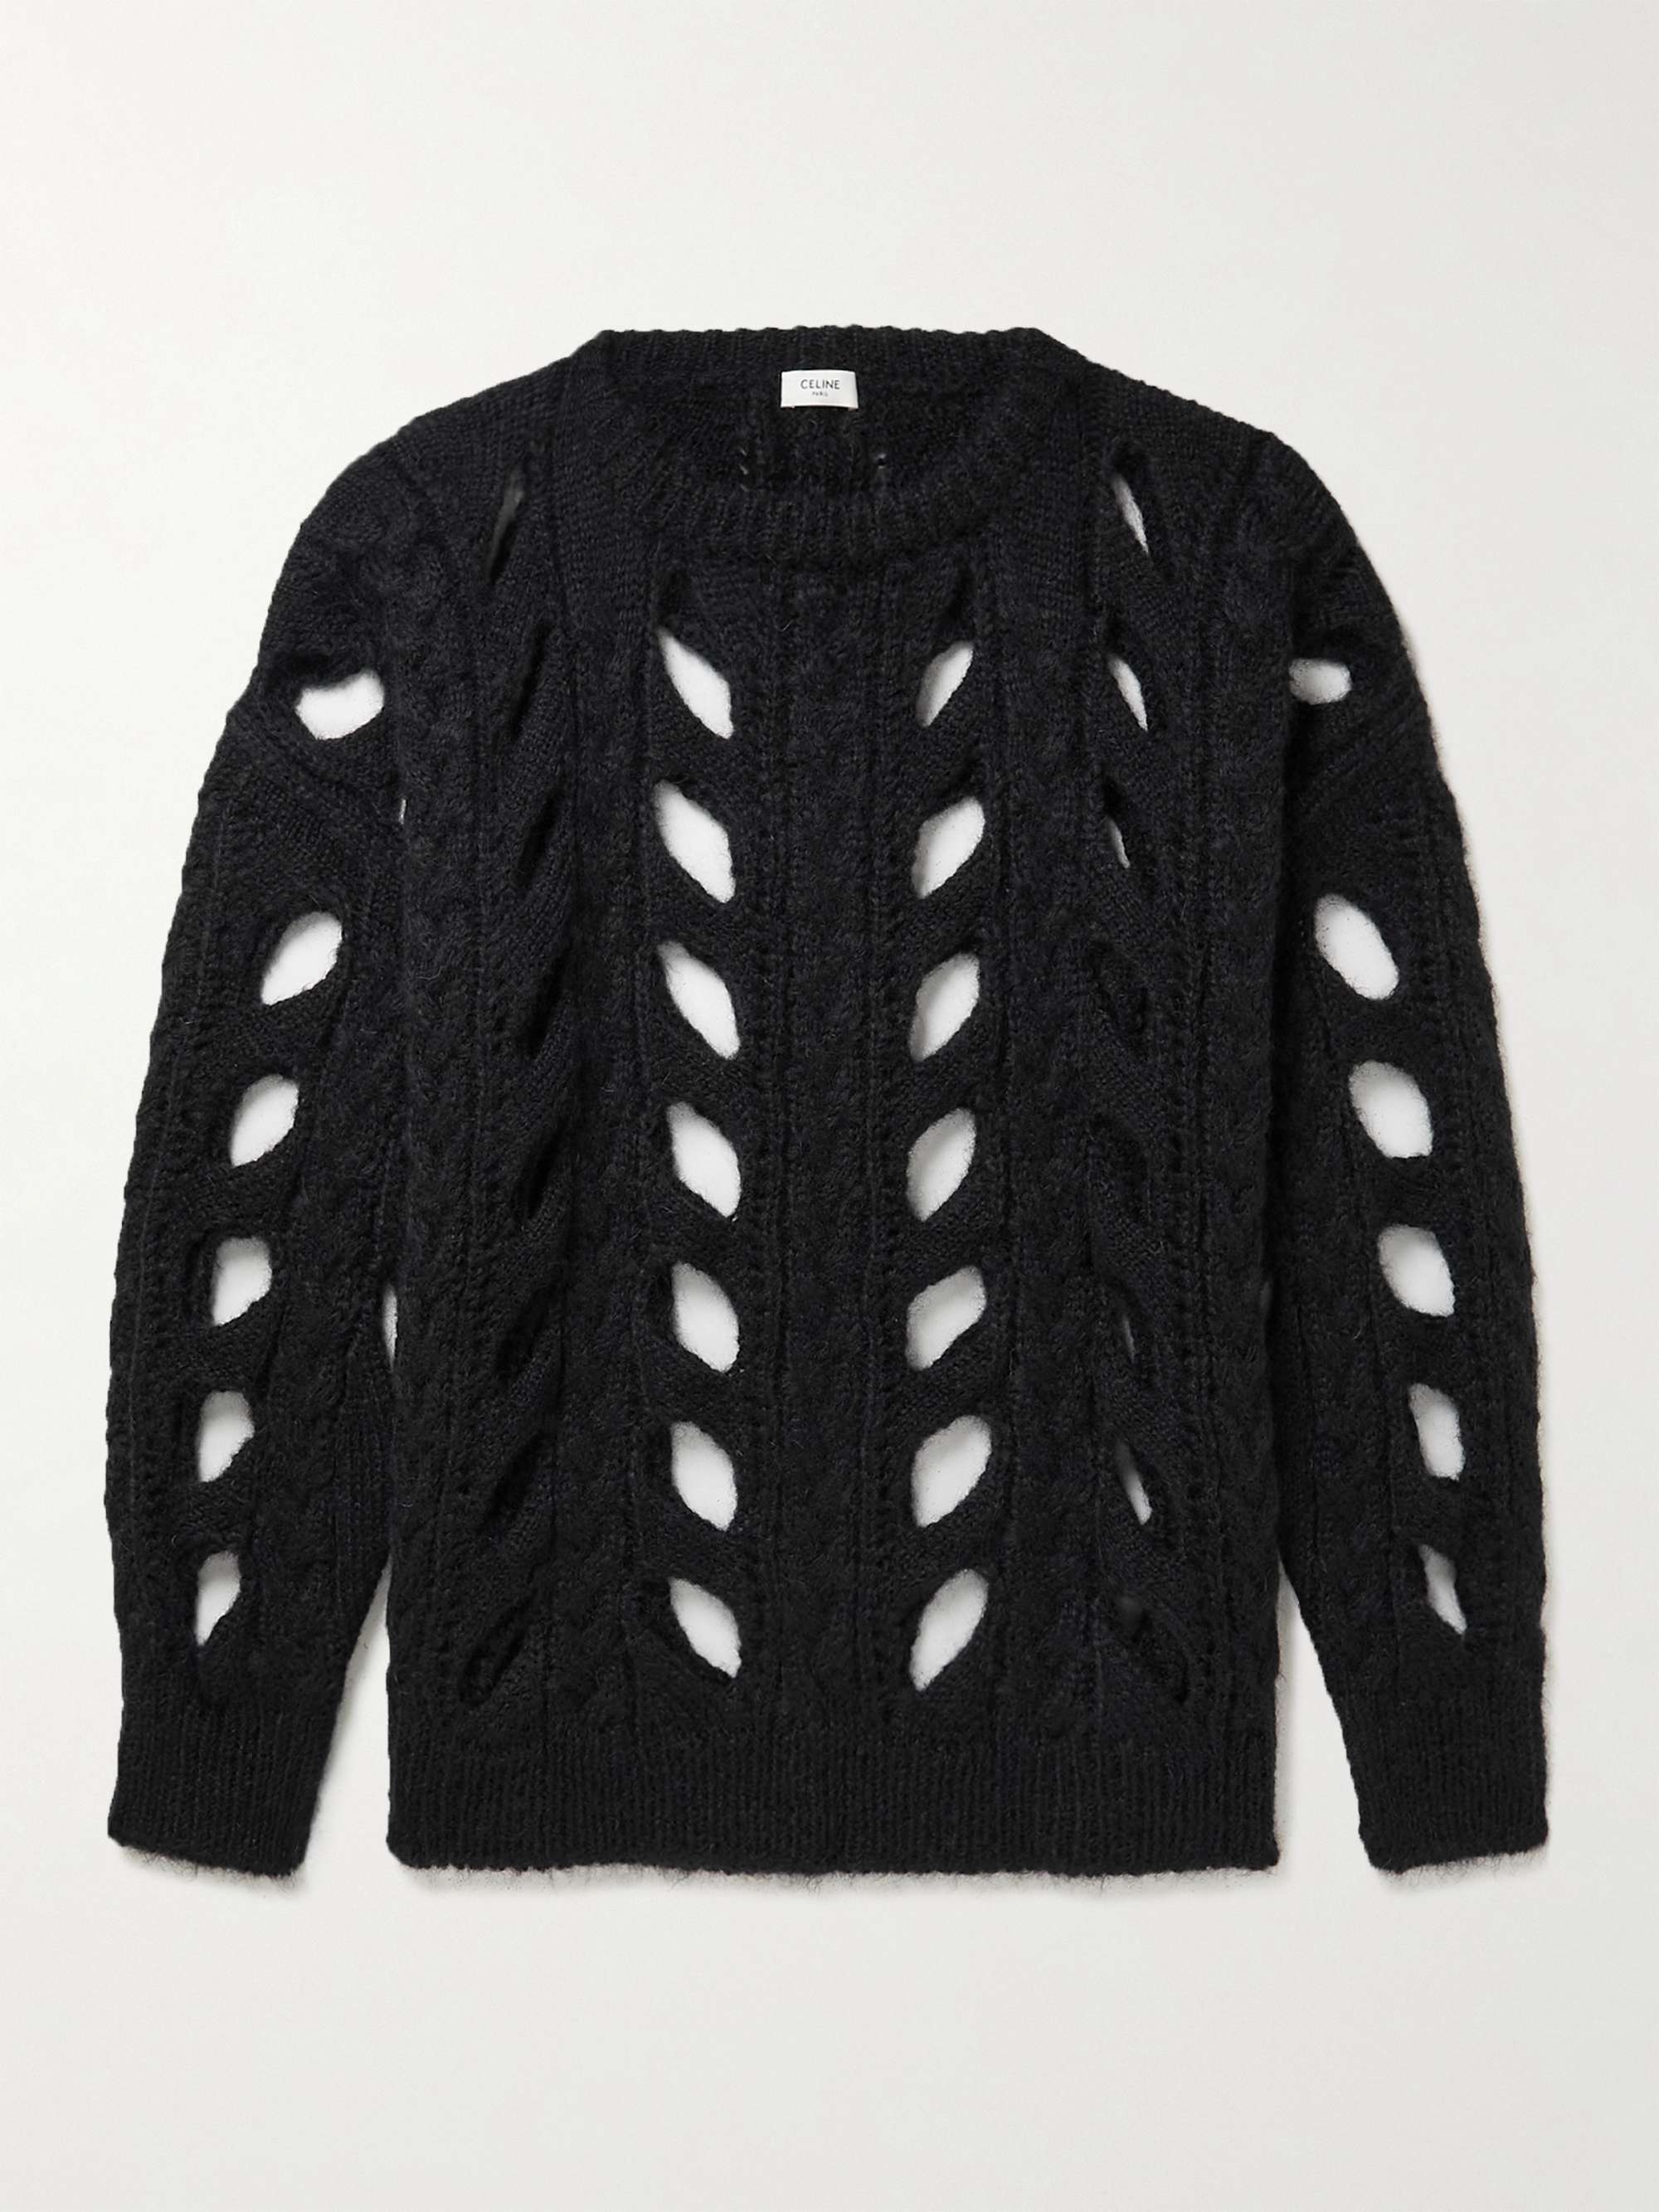 CELINE HOMME Cutout Cable-Knit Mohair-Blend Sweater for Men | MR PORTER